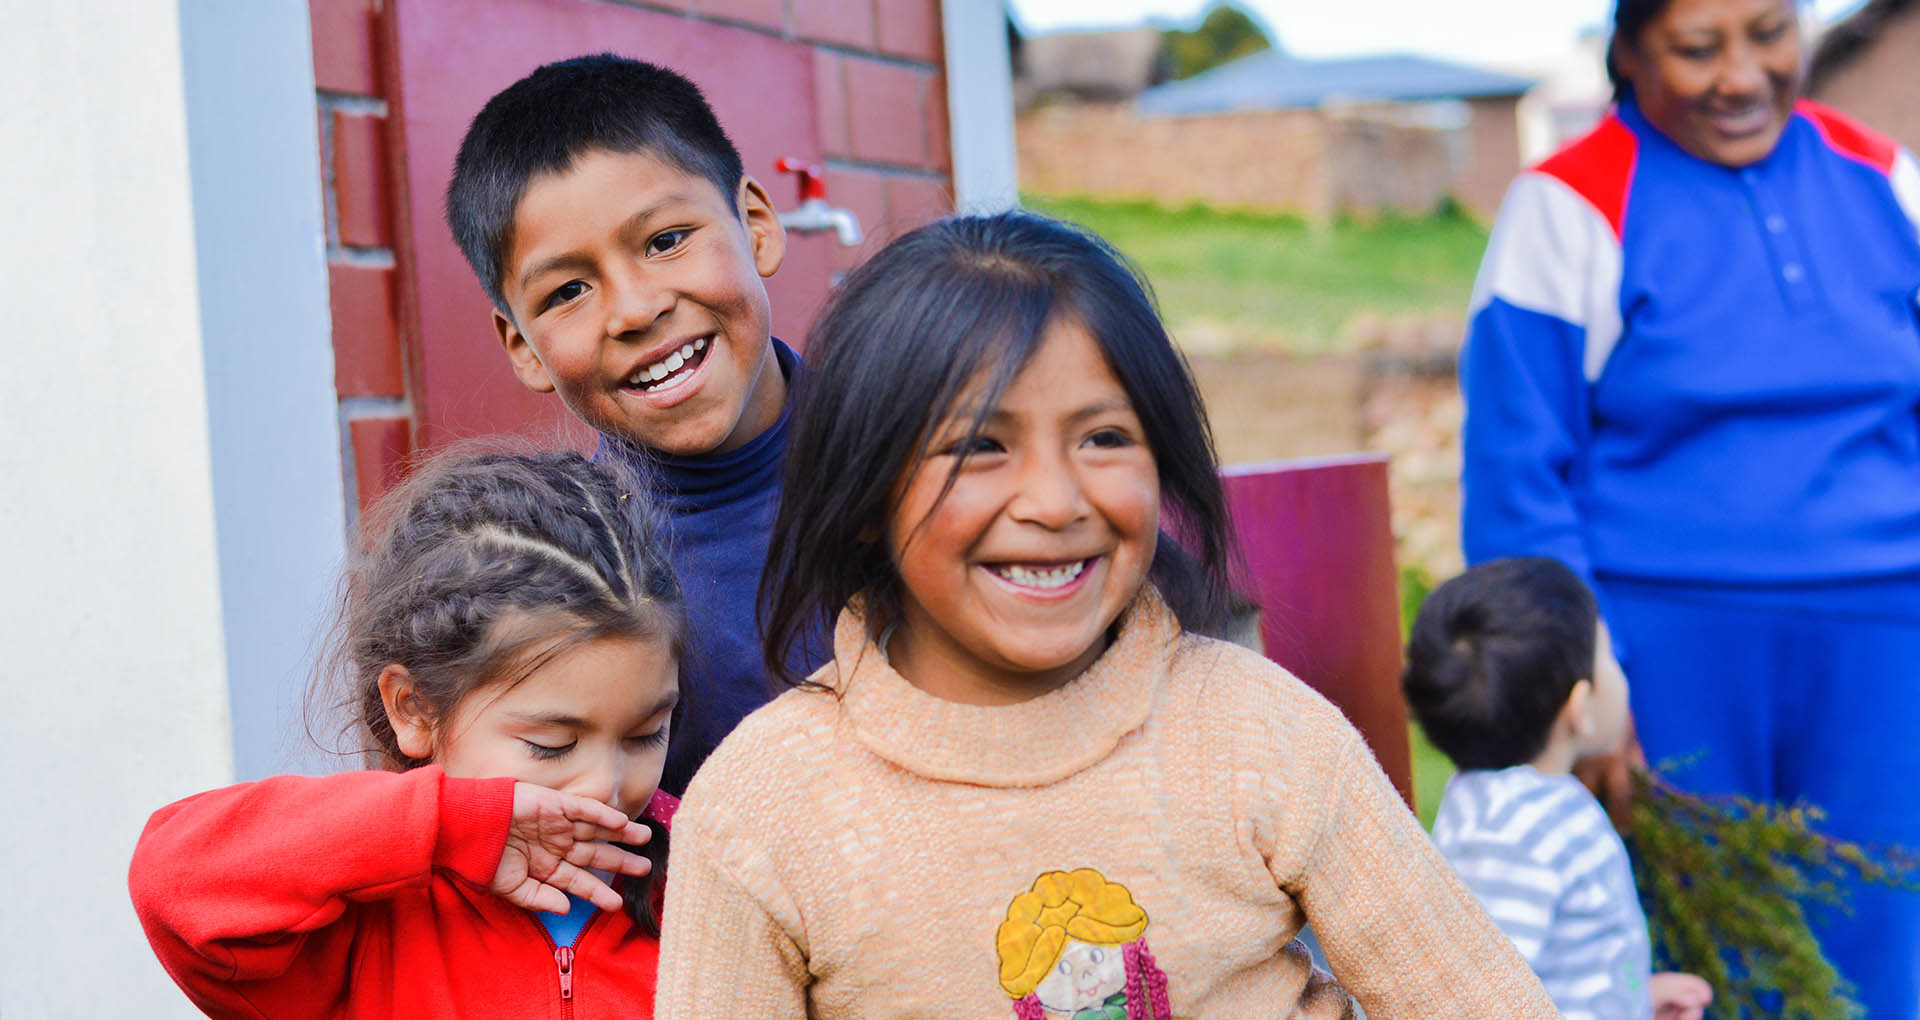 Smiling Indigenous Children